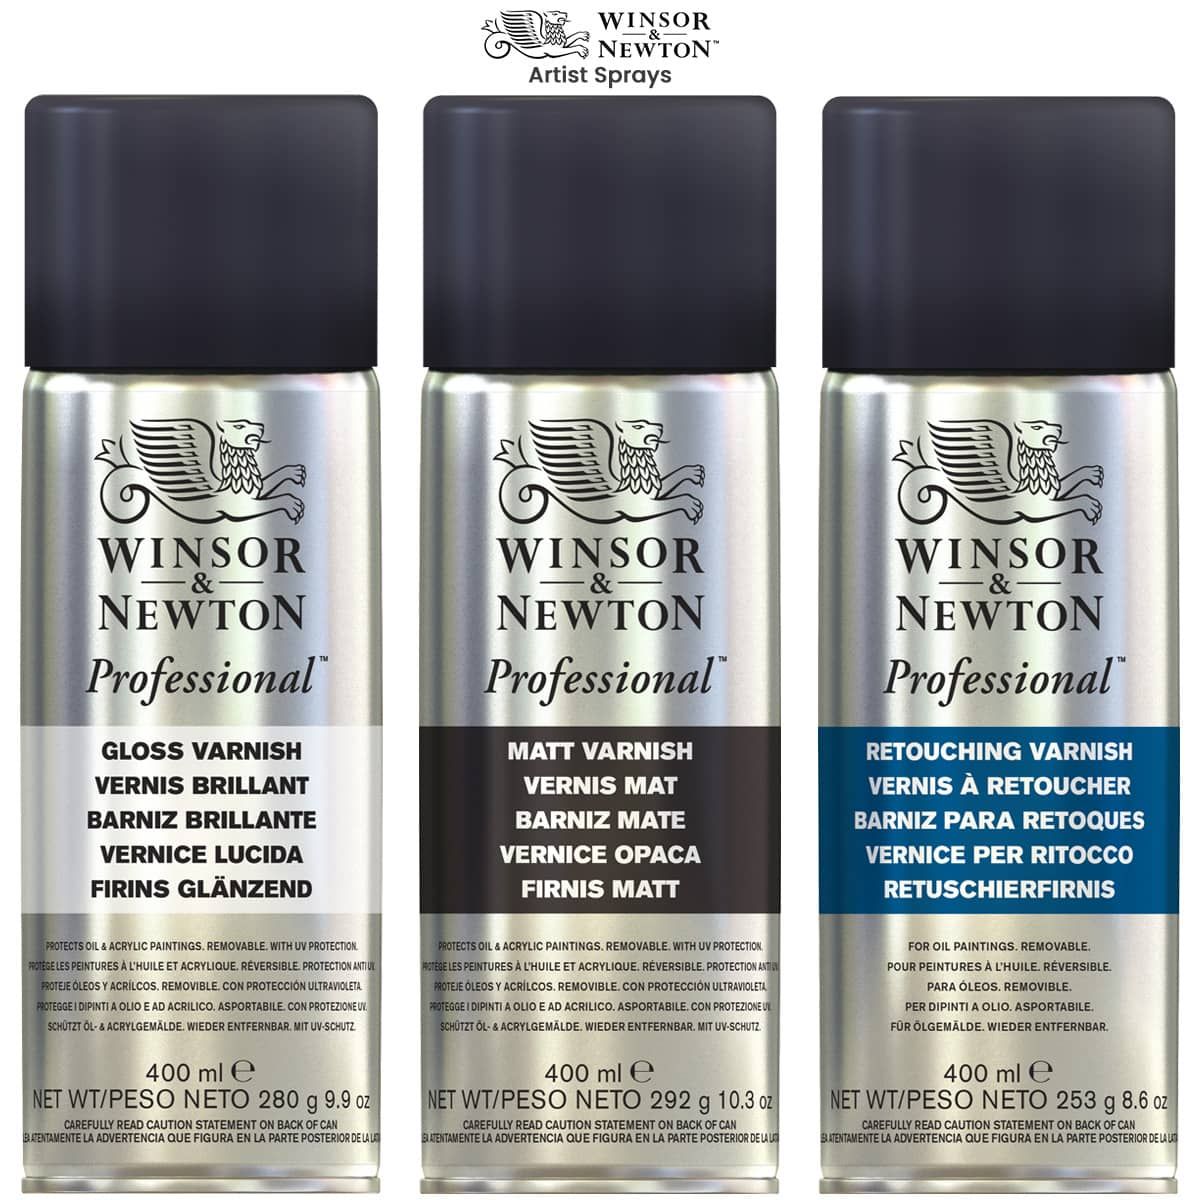 Winsor & Newton Artist Sprays